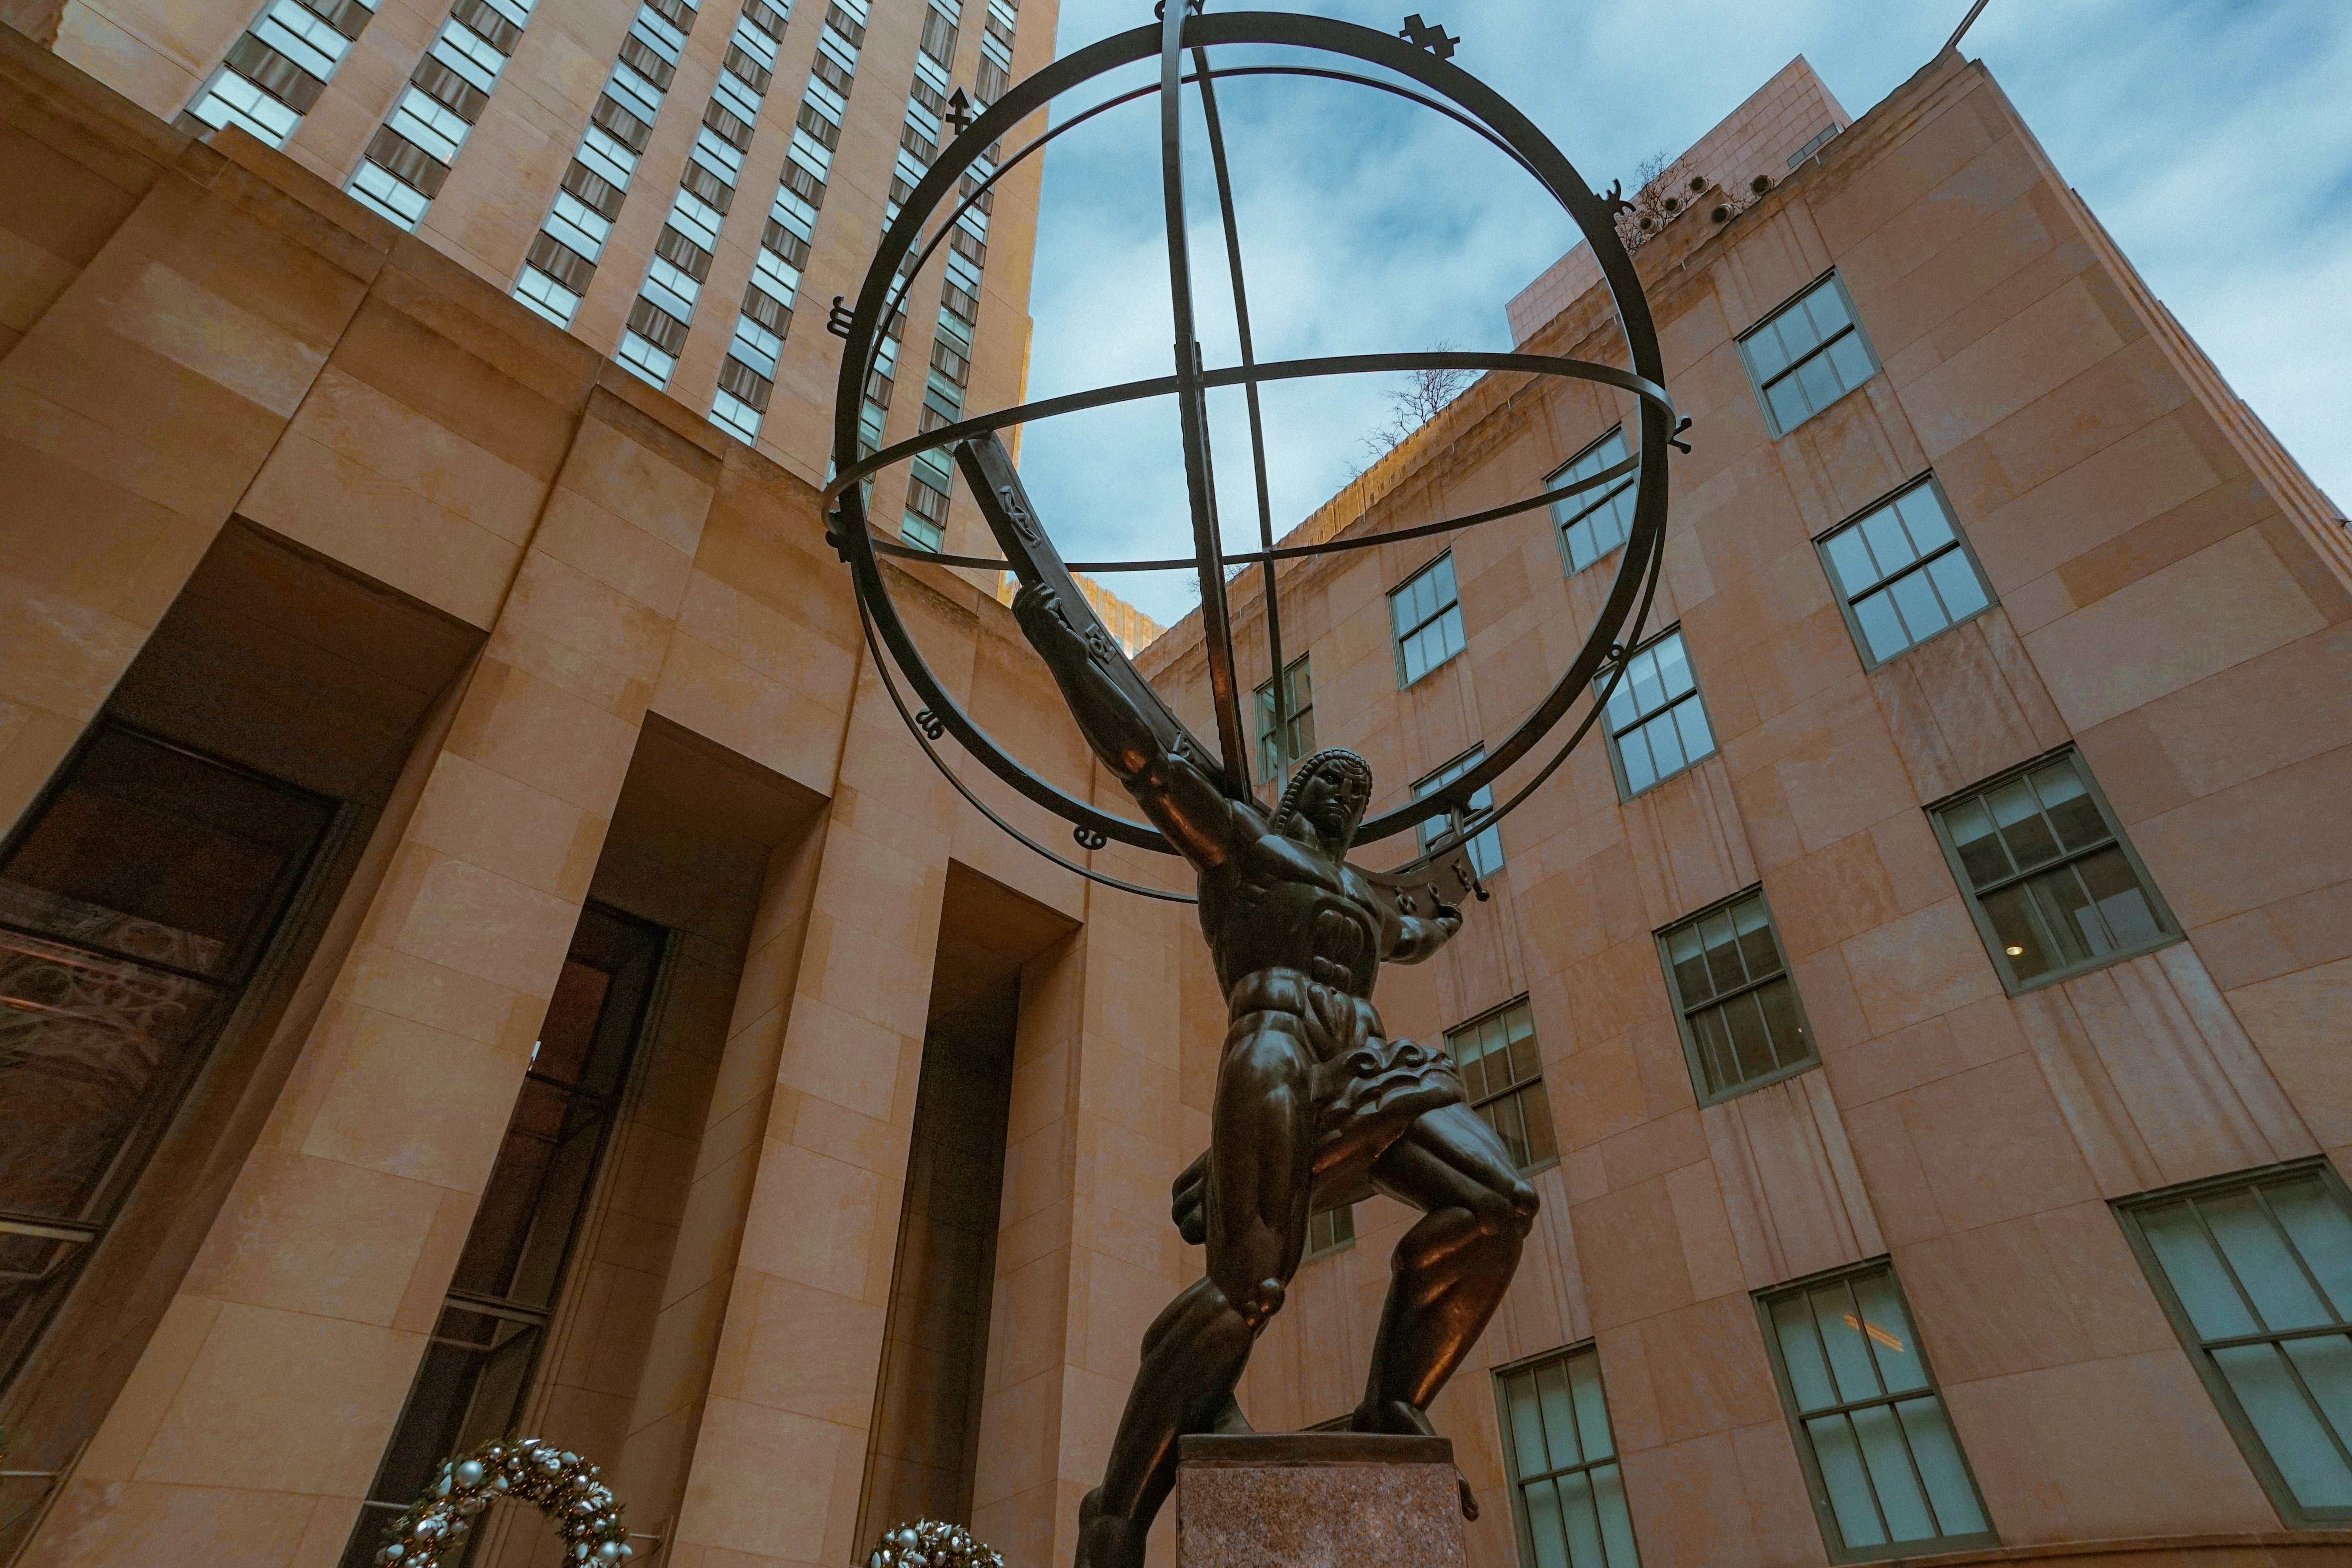 Atlas is a bronze statue in Rockefeller Center